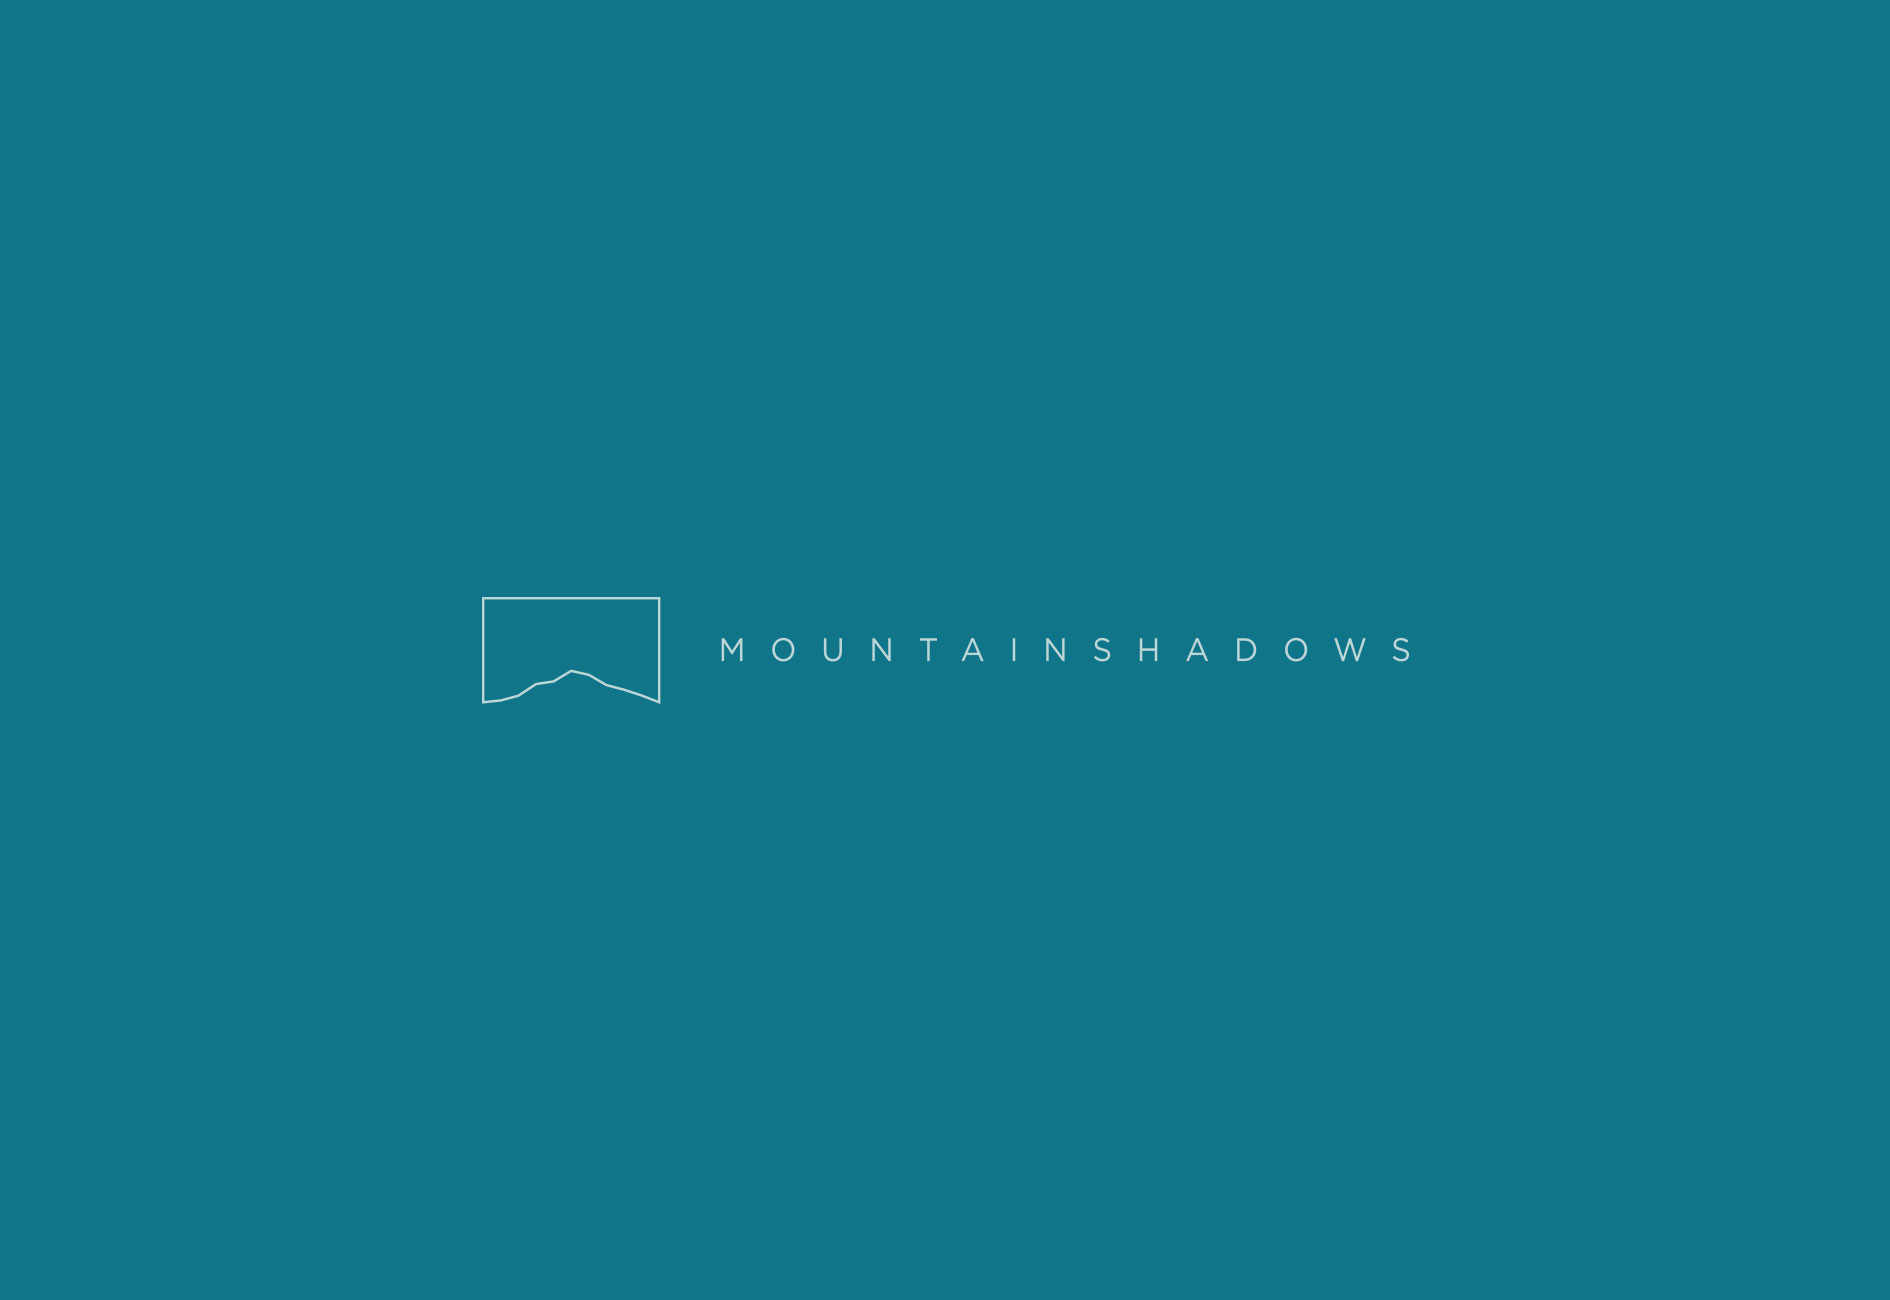 MOUNTAIN SHADOWS BRANDING by Mark Zeff Design